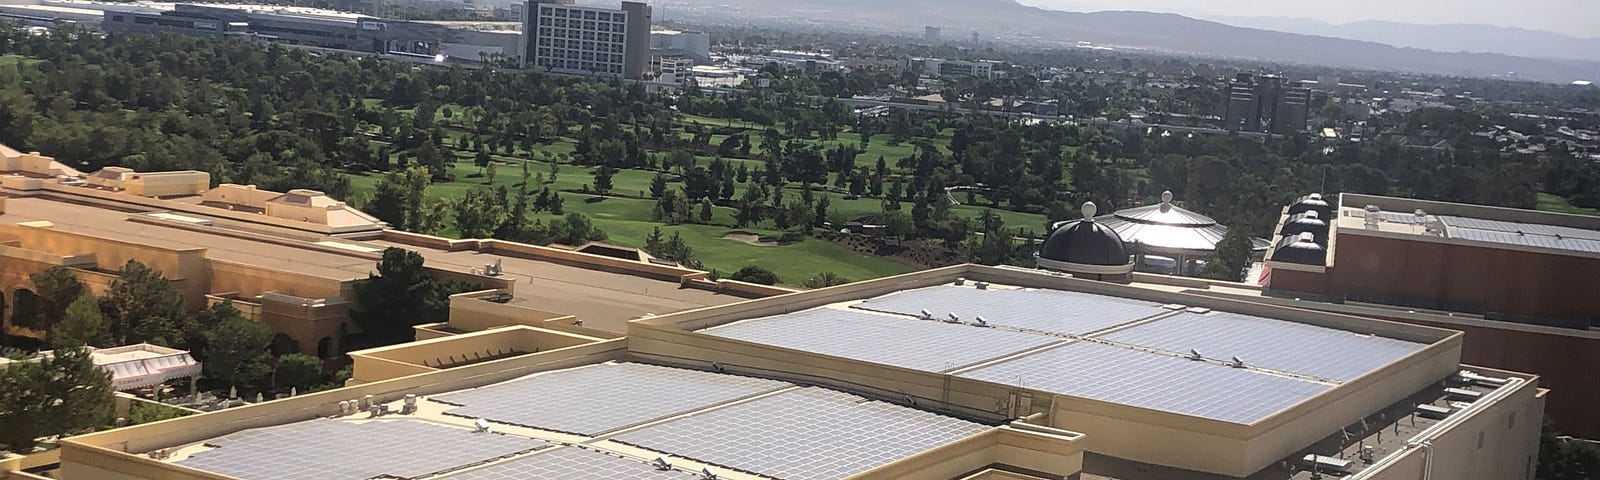 Rooftop solar system at the Wynn Las Vegas resort